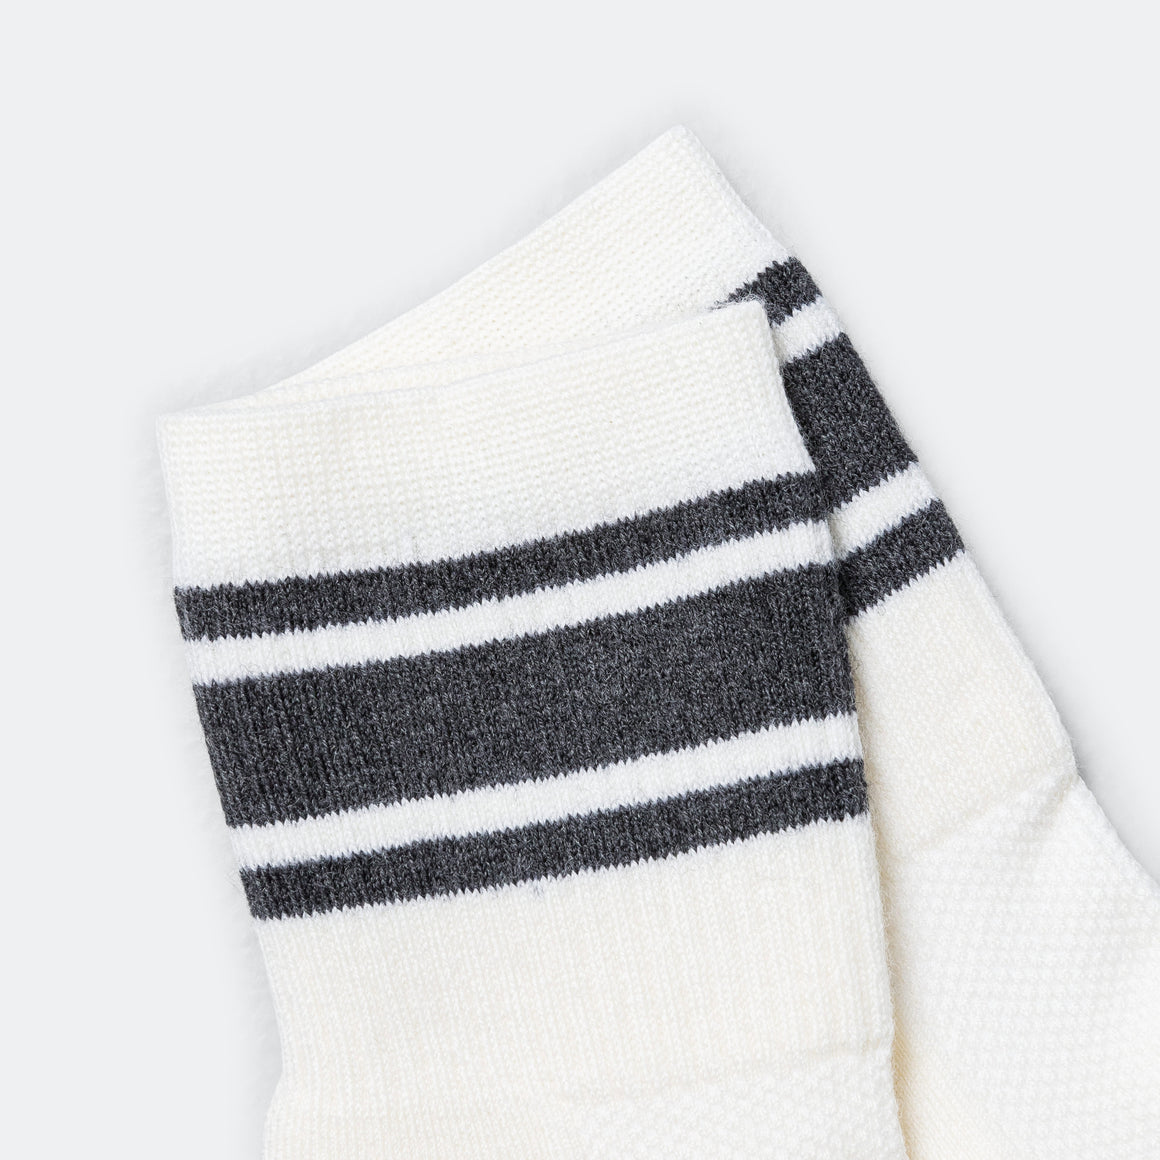 Satisfy - Merino Tube Socks - White/White - Up There Athletics